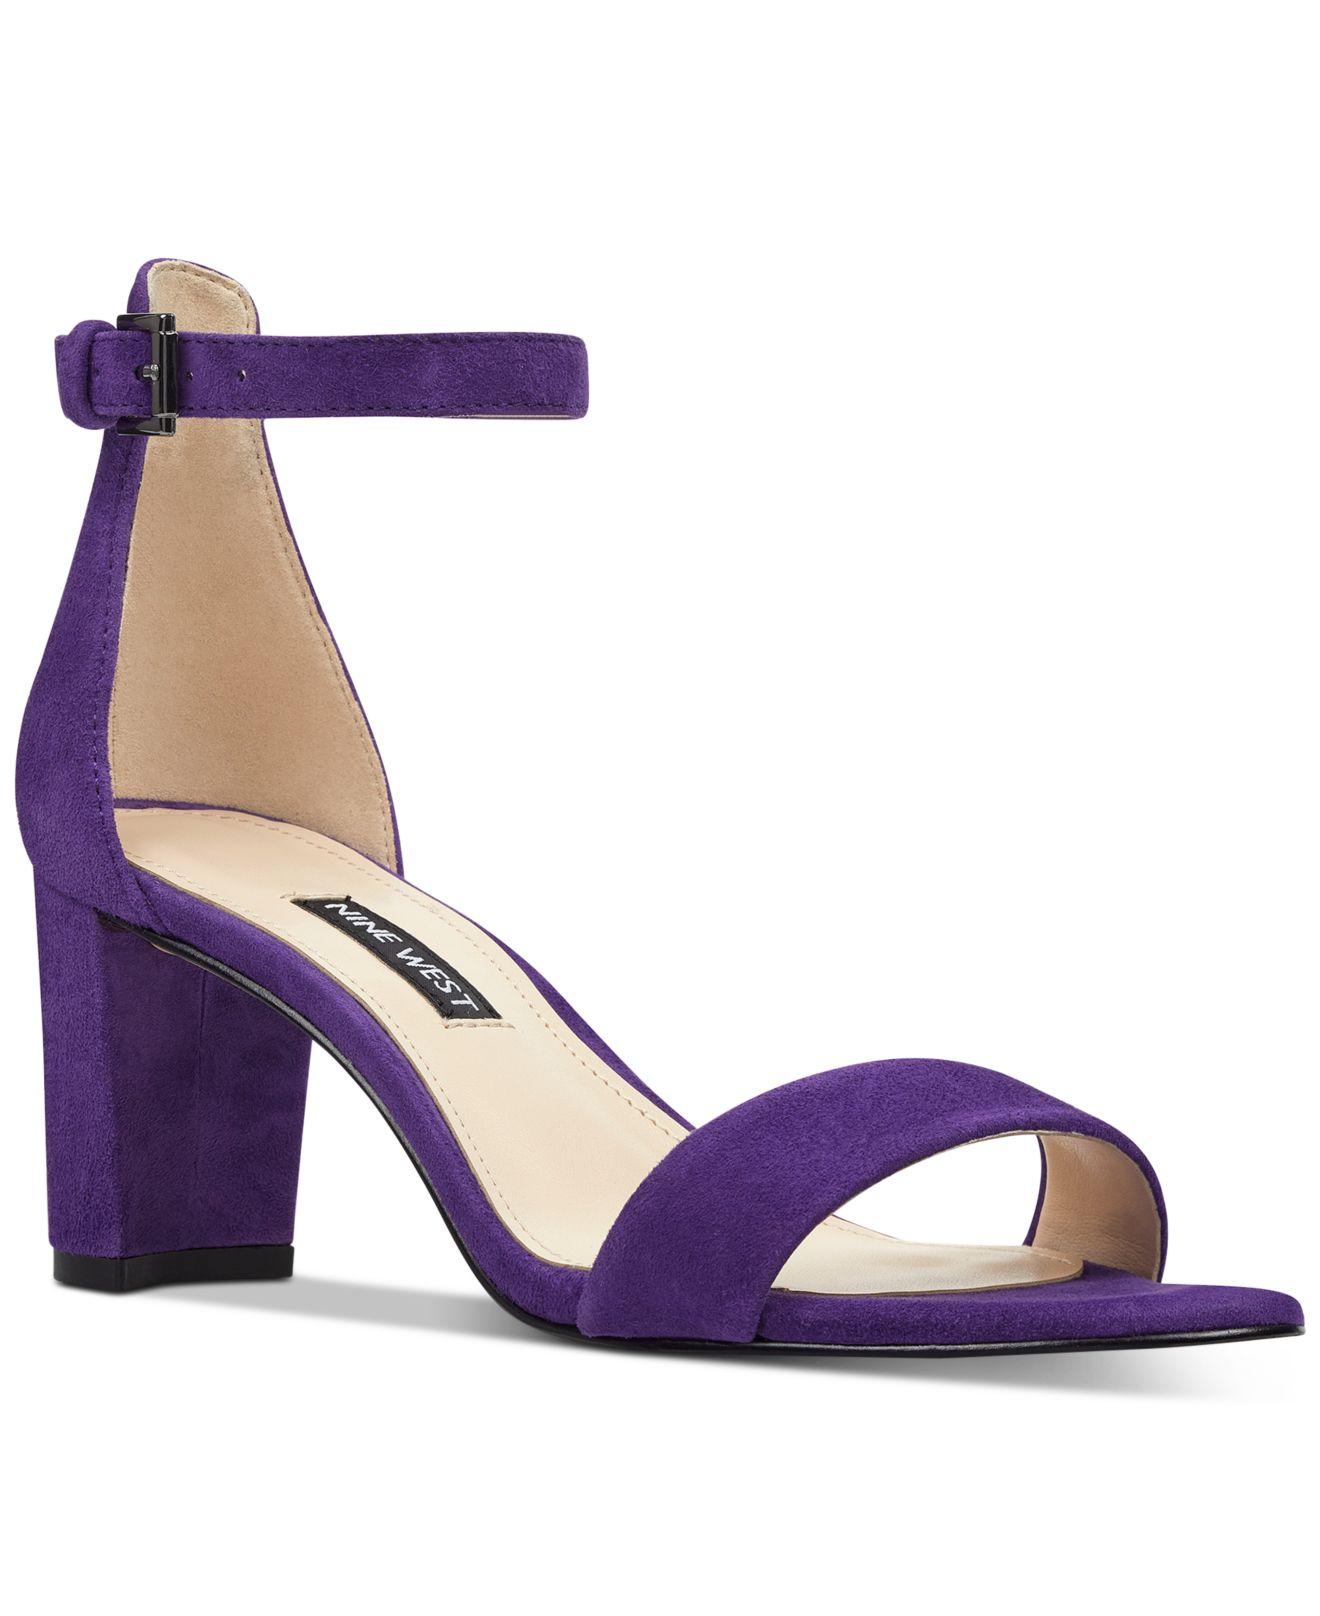 Nine West Suede Pruce Block Heel Sandal in Dark Purple (Purple) - Lyst